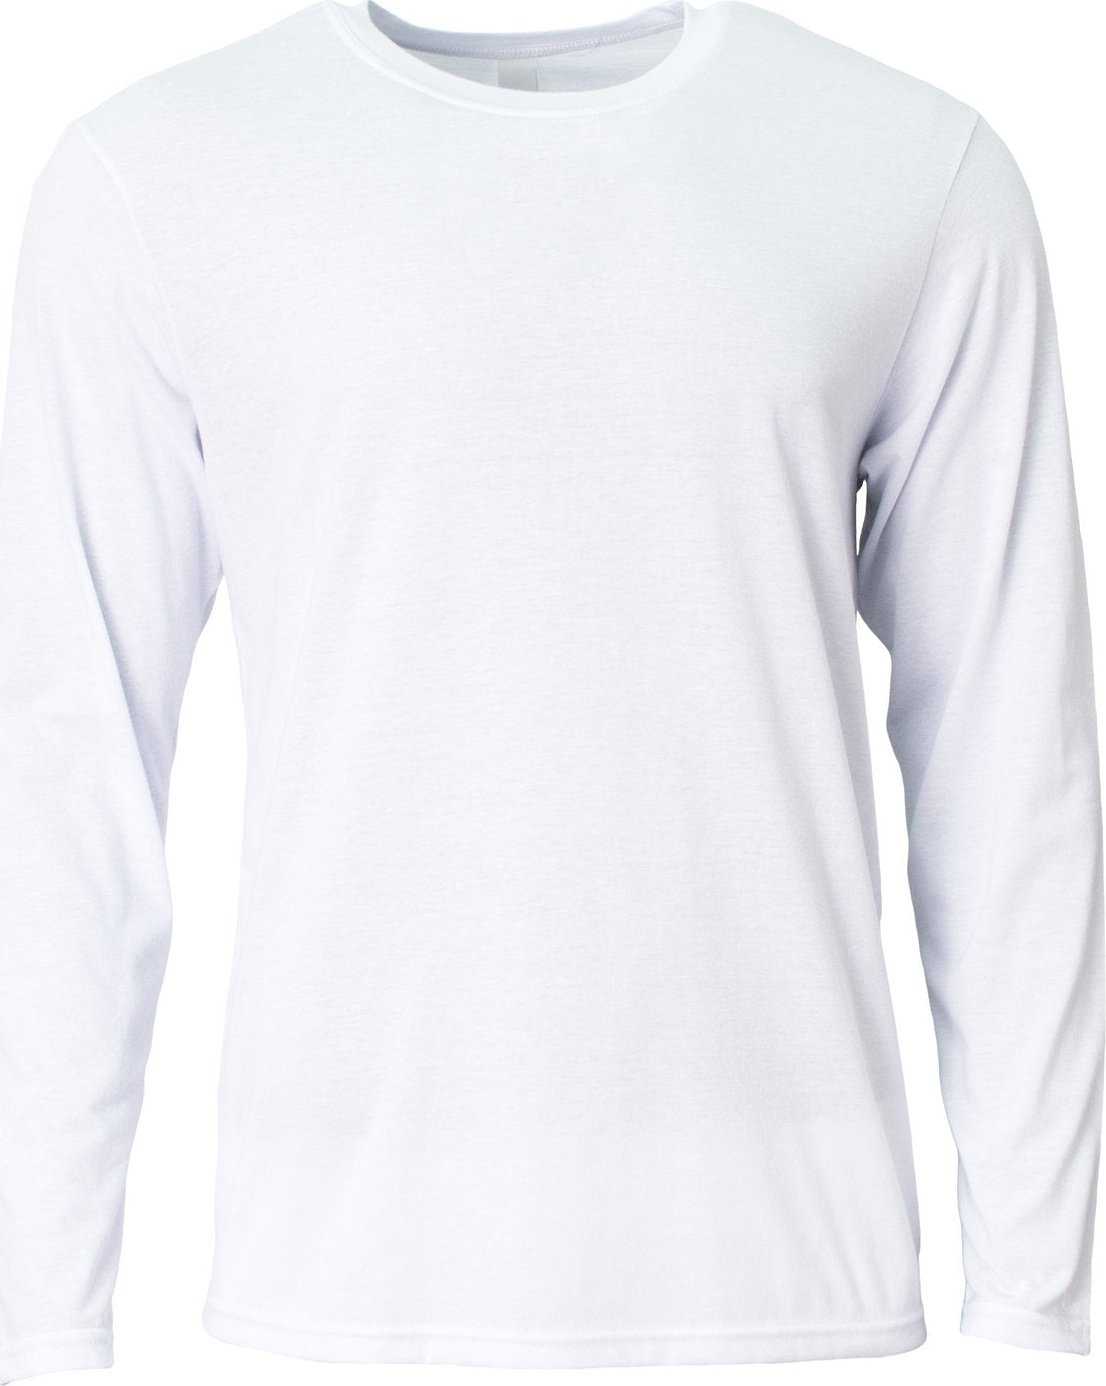 A4 NB3029 Youth Long Sleeve Softek T-Shirt - White